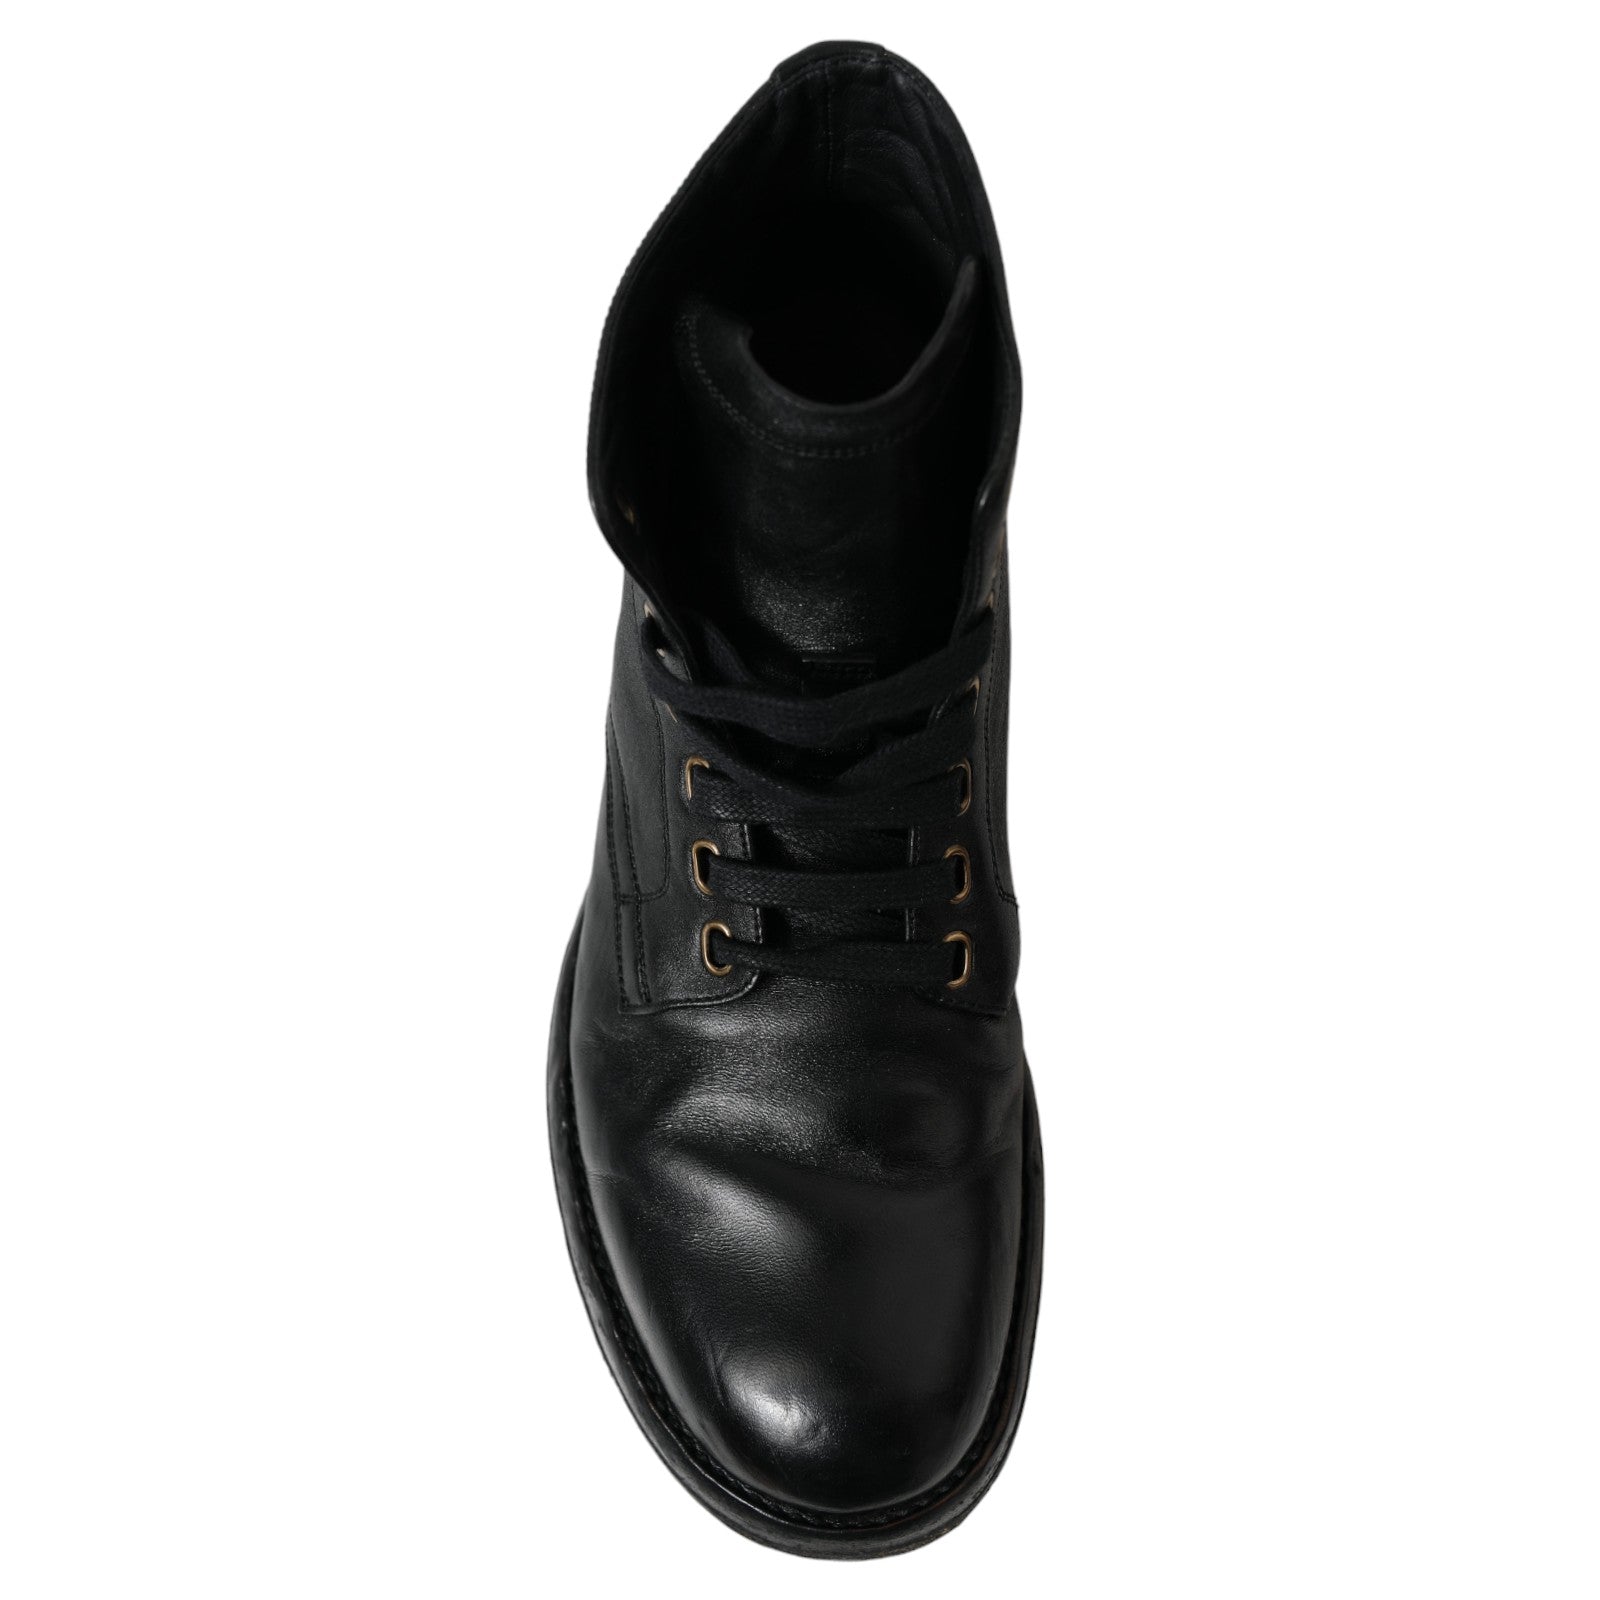 Elegant Black Horse Leather Ankle Boots